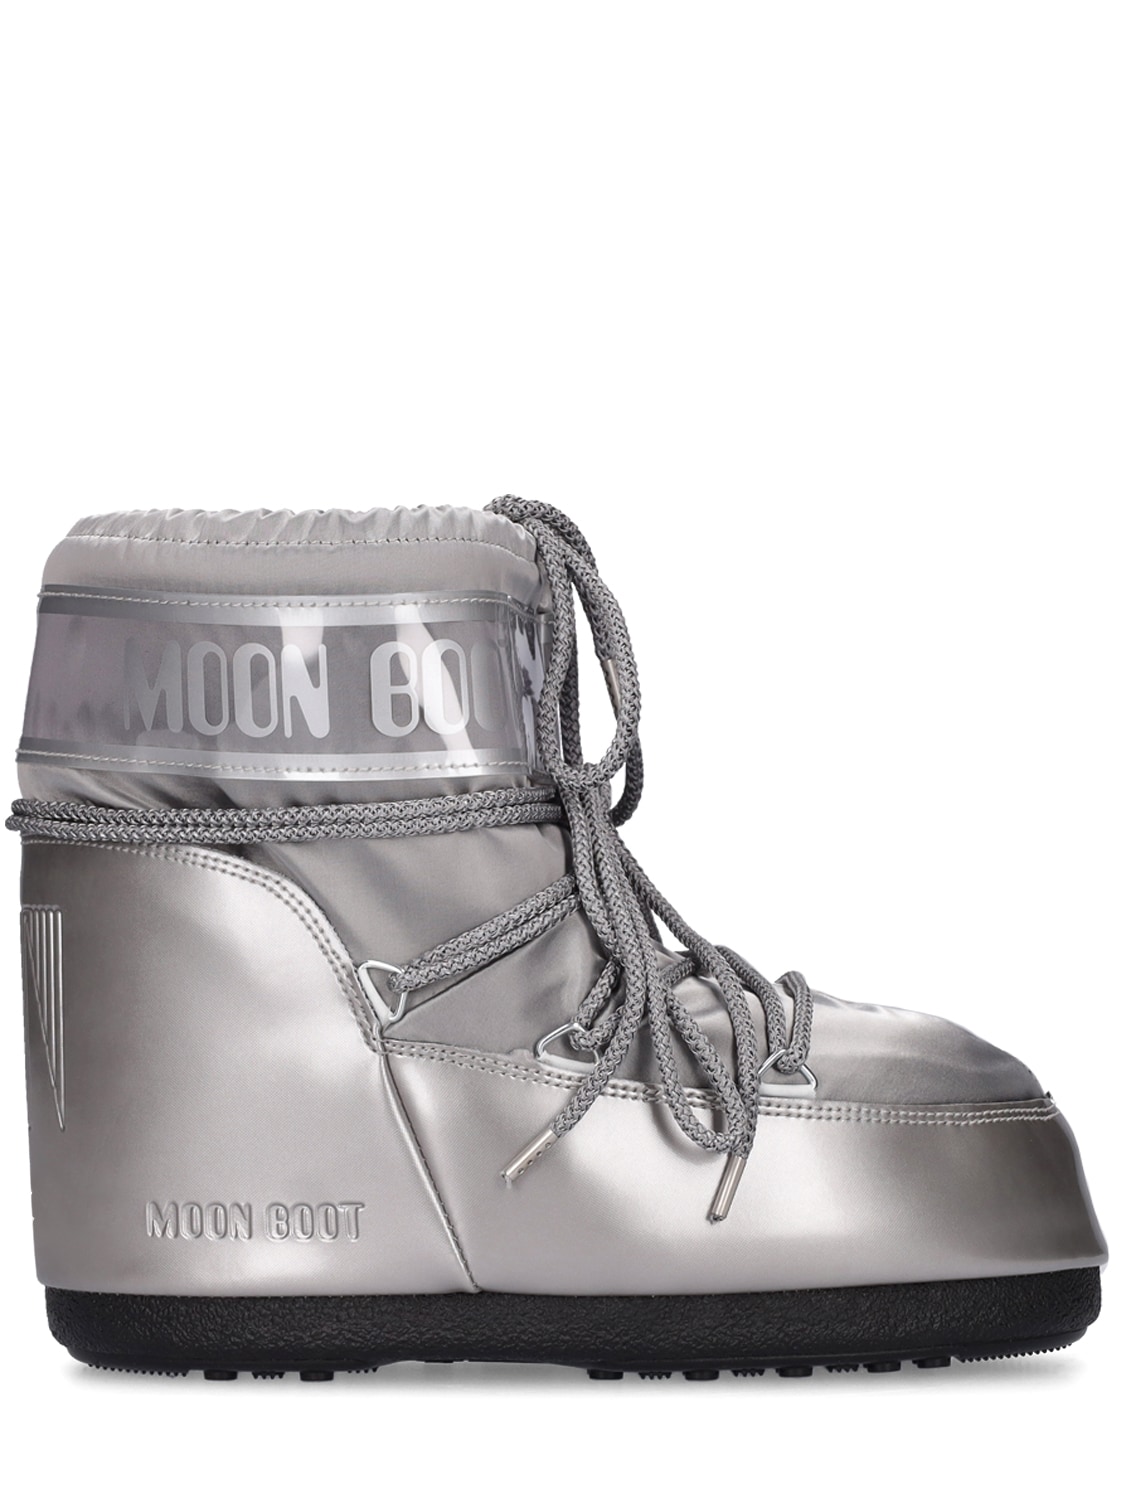 Low icon glance metallic moon boots - Moon Boot - Women